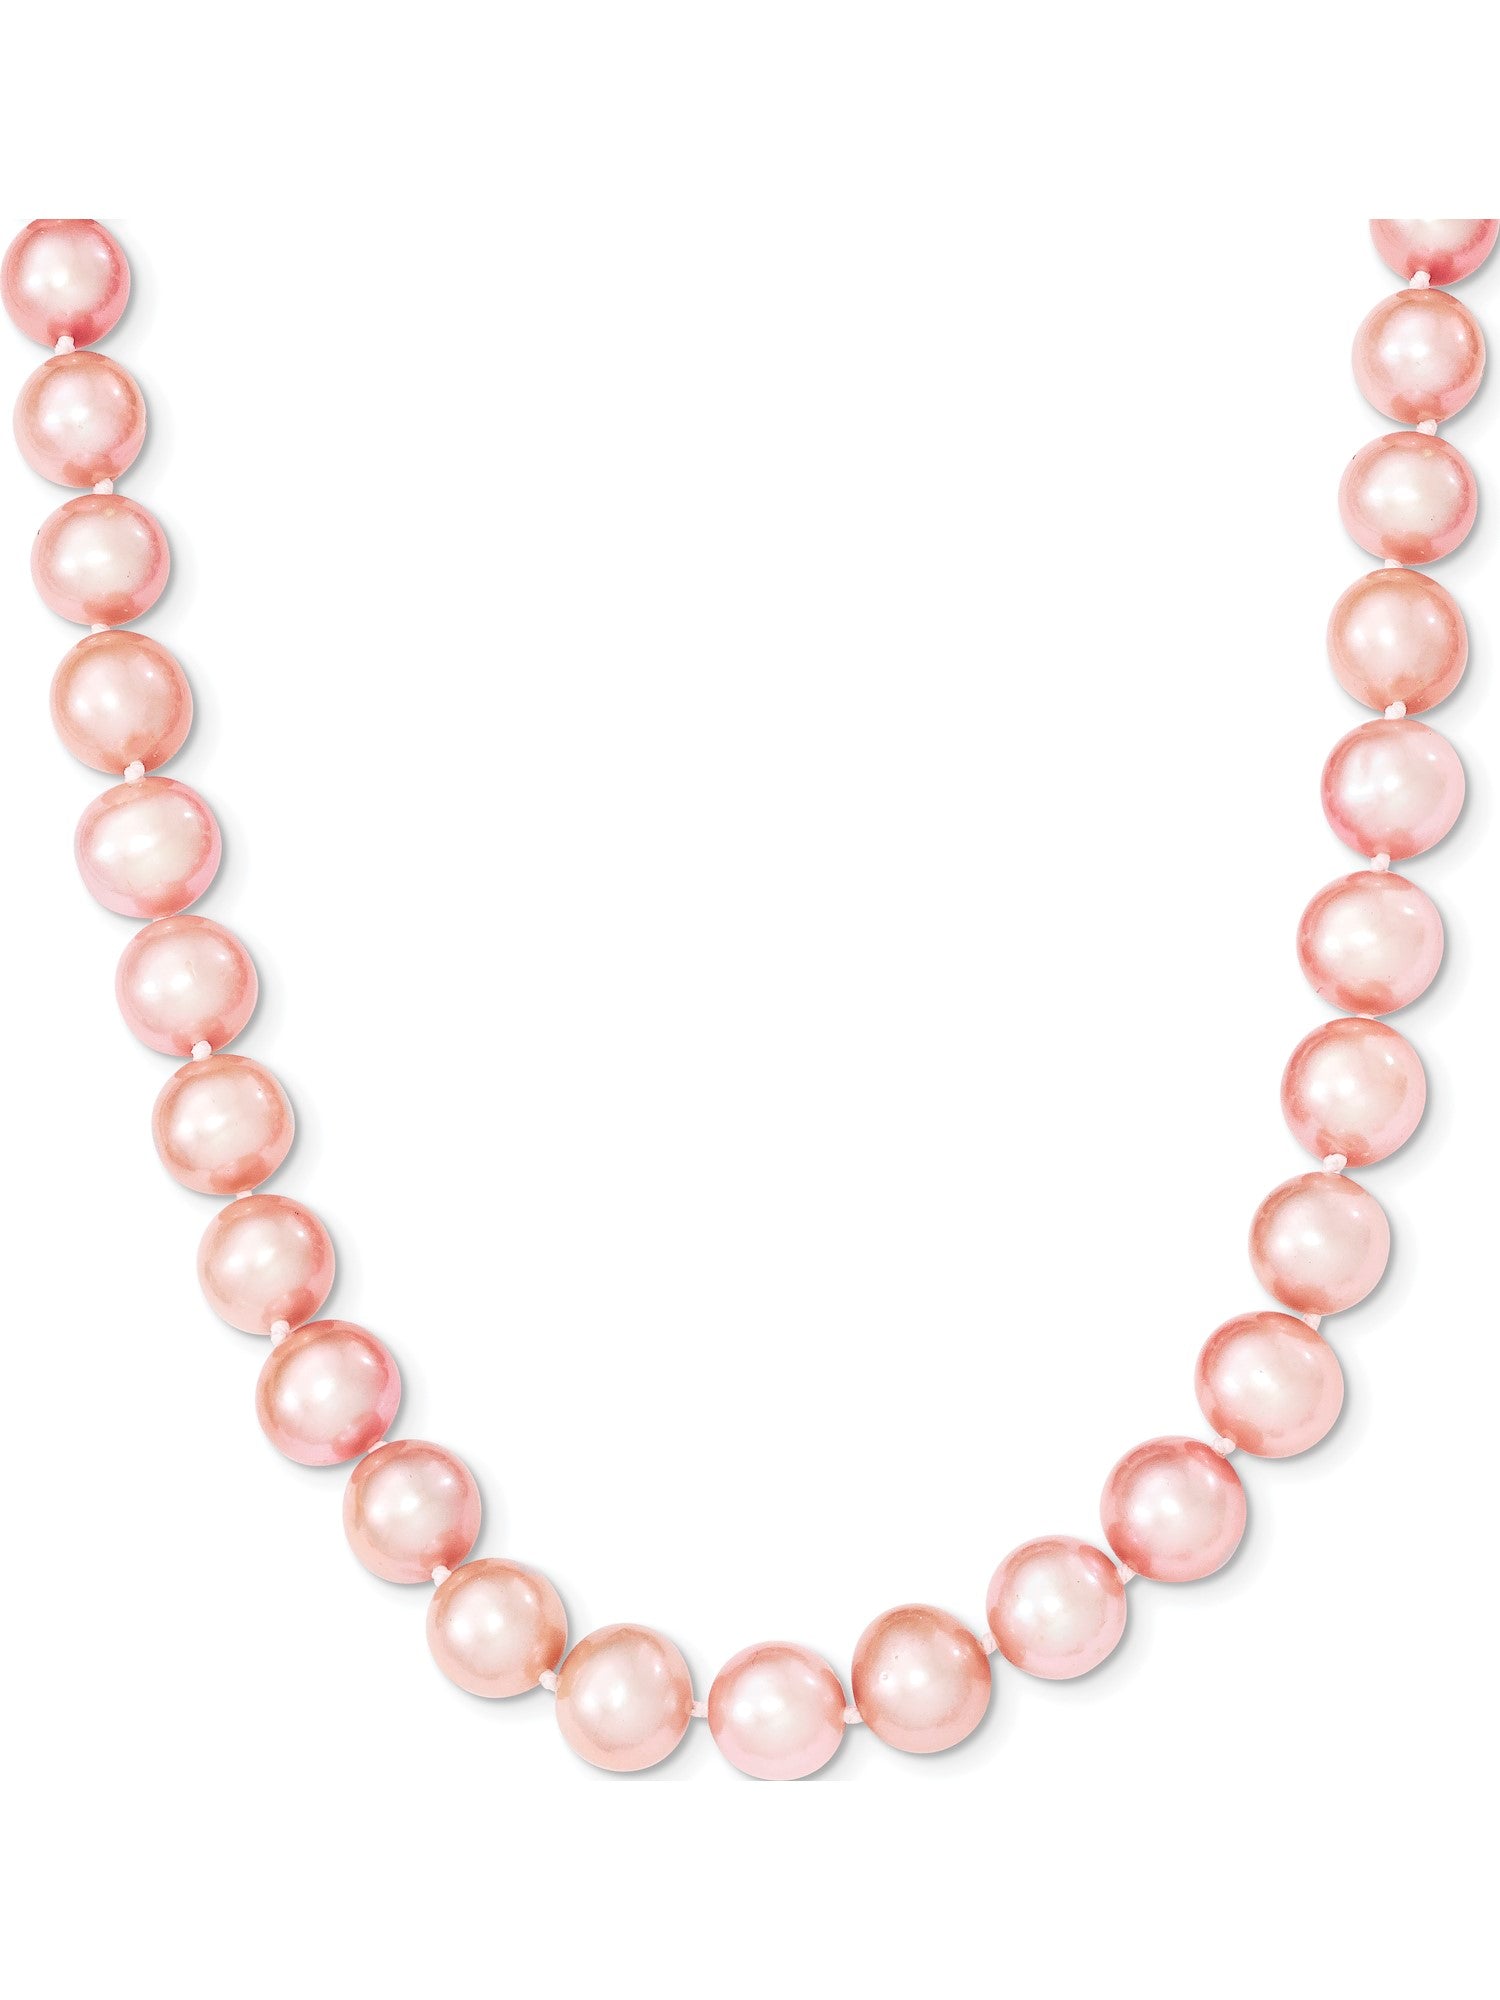 Pearl Necklace Bracelet Sets